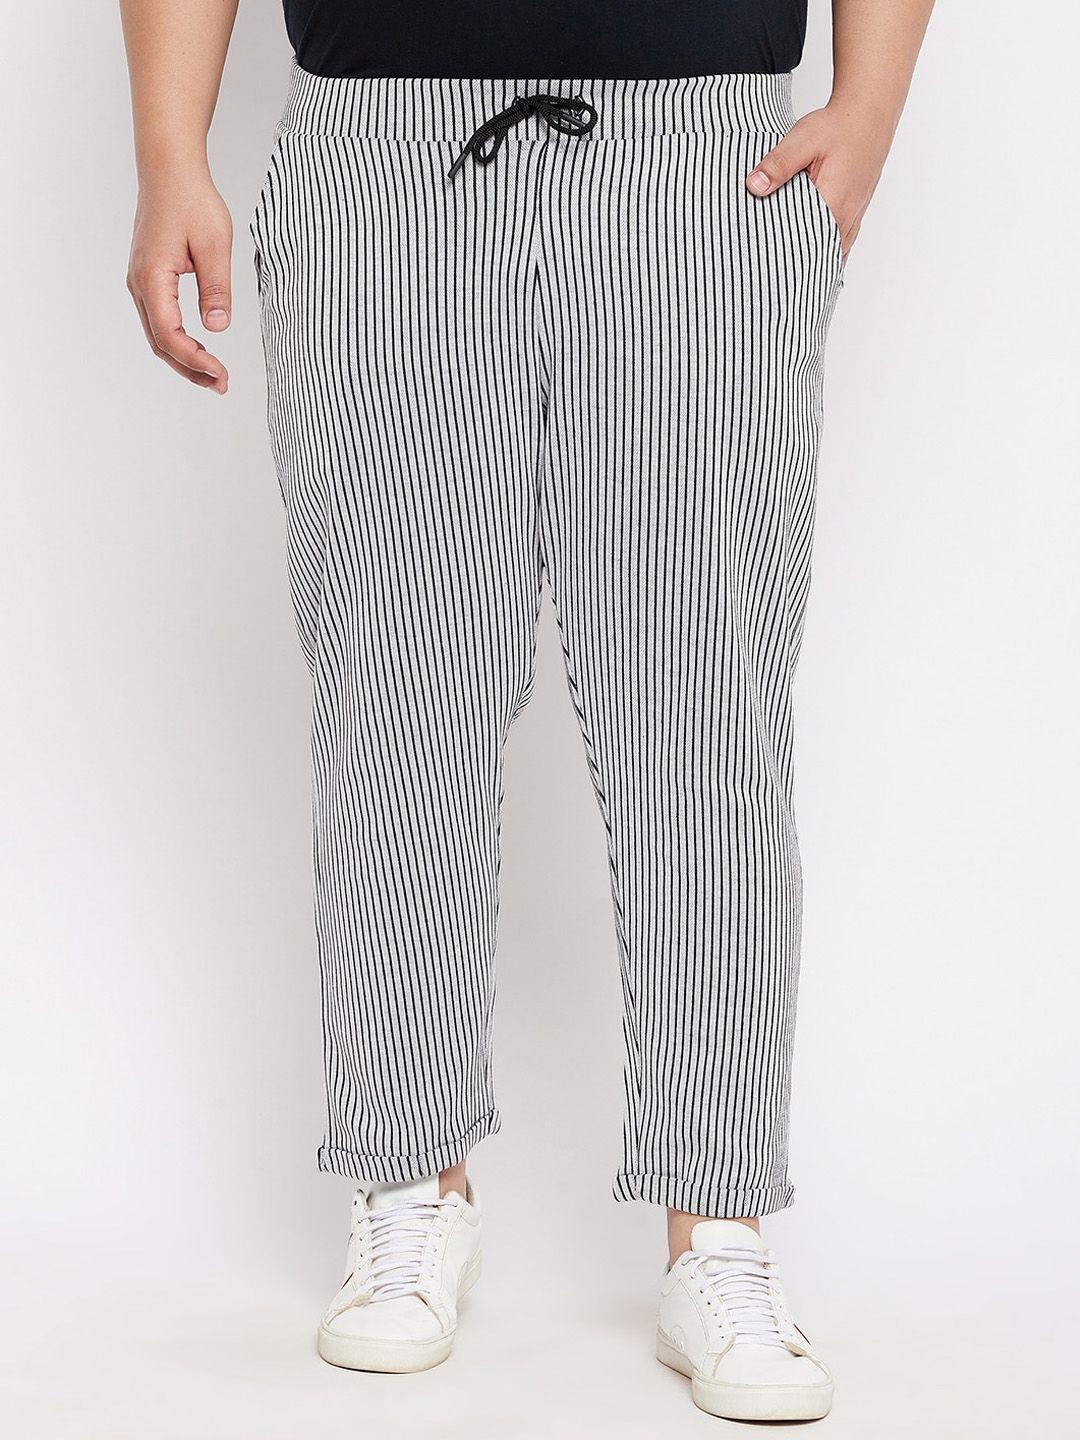 austivo men grey striped cotton track pants